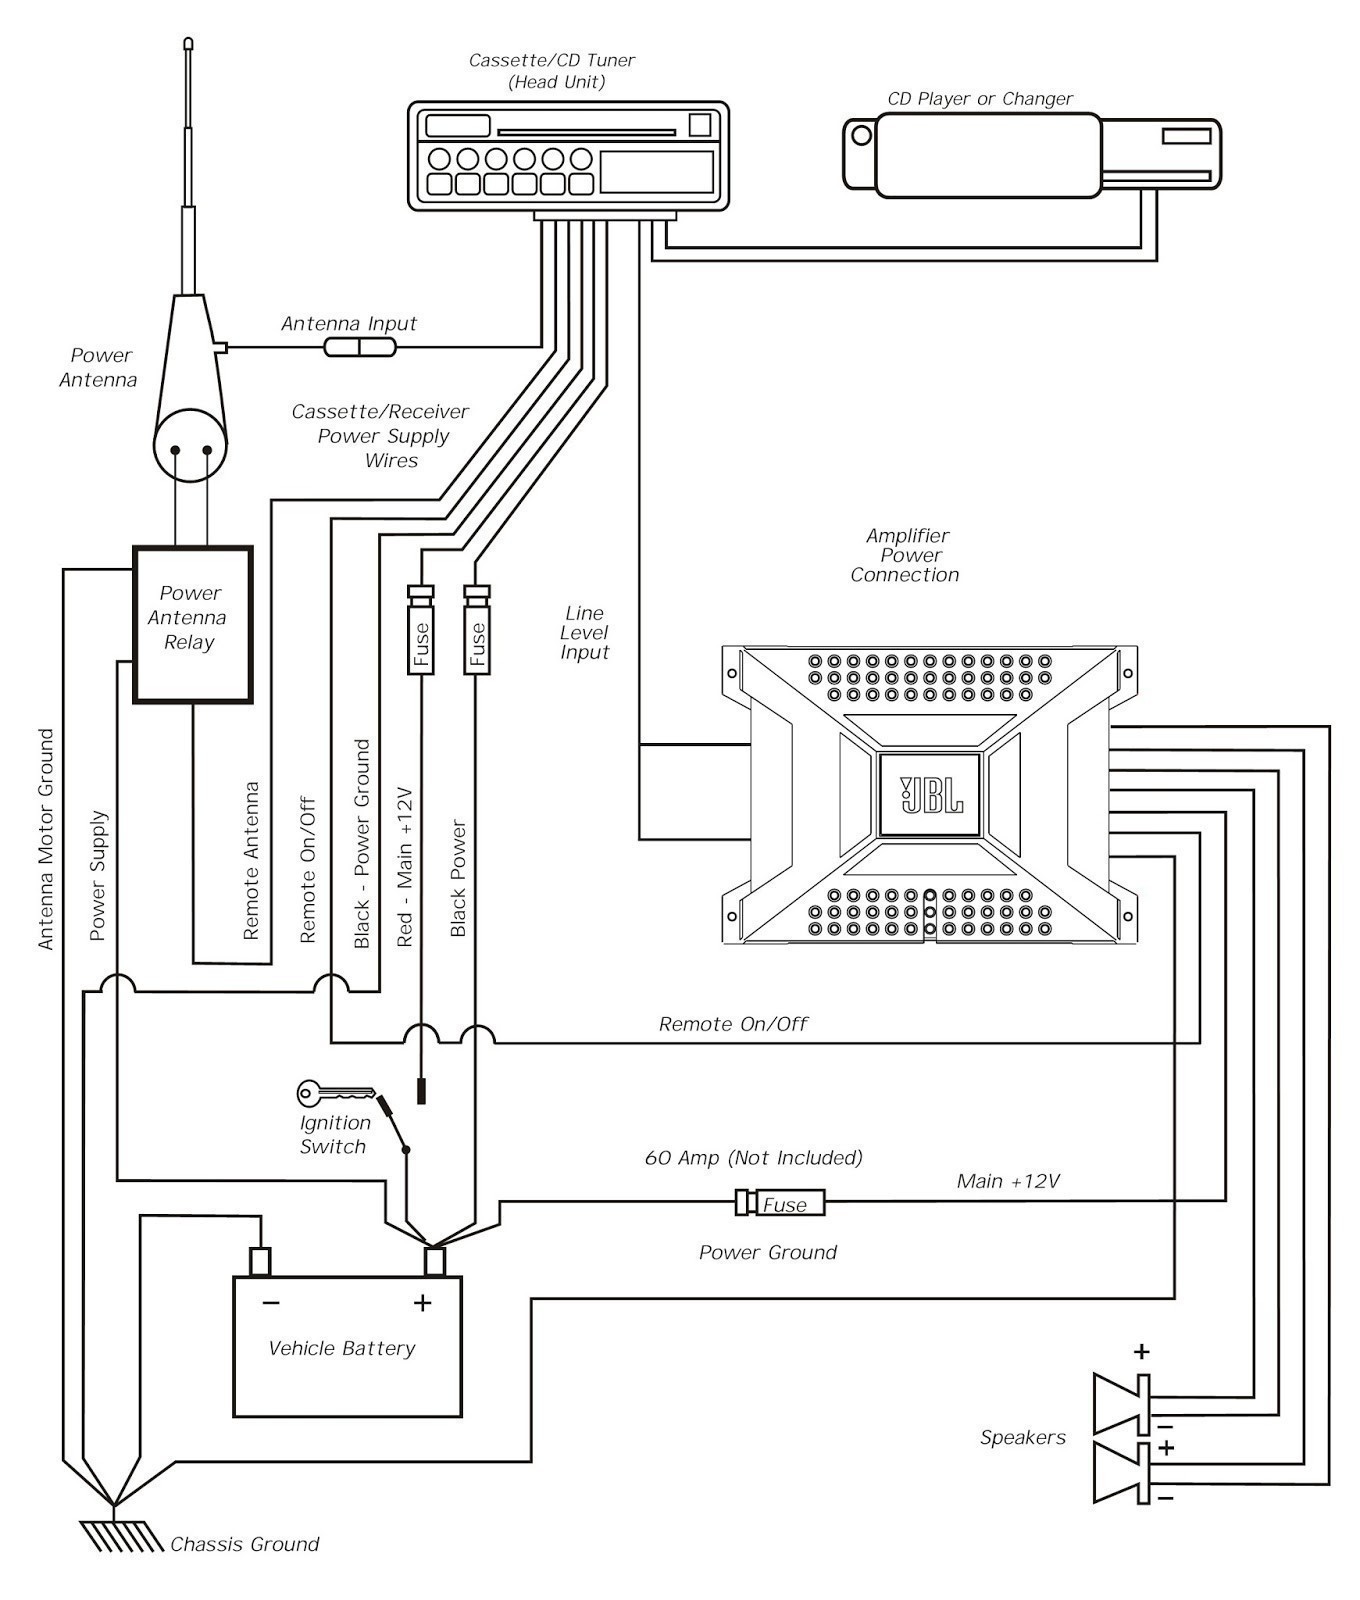 Ac Unit Wiring Diagram Fresh Wiring Diagram Air Conditioning Unit Reference Wiring Diagram Car